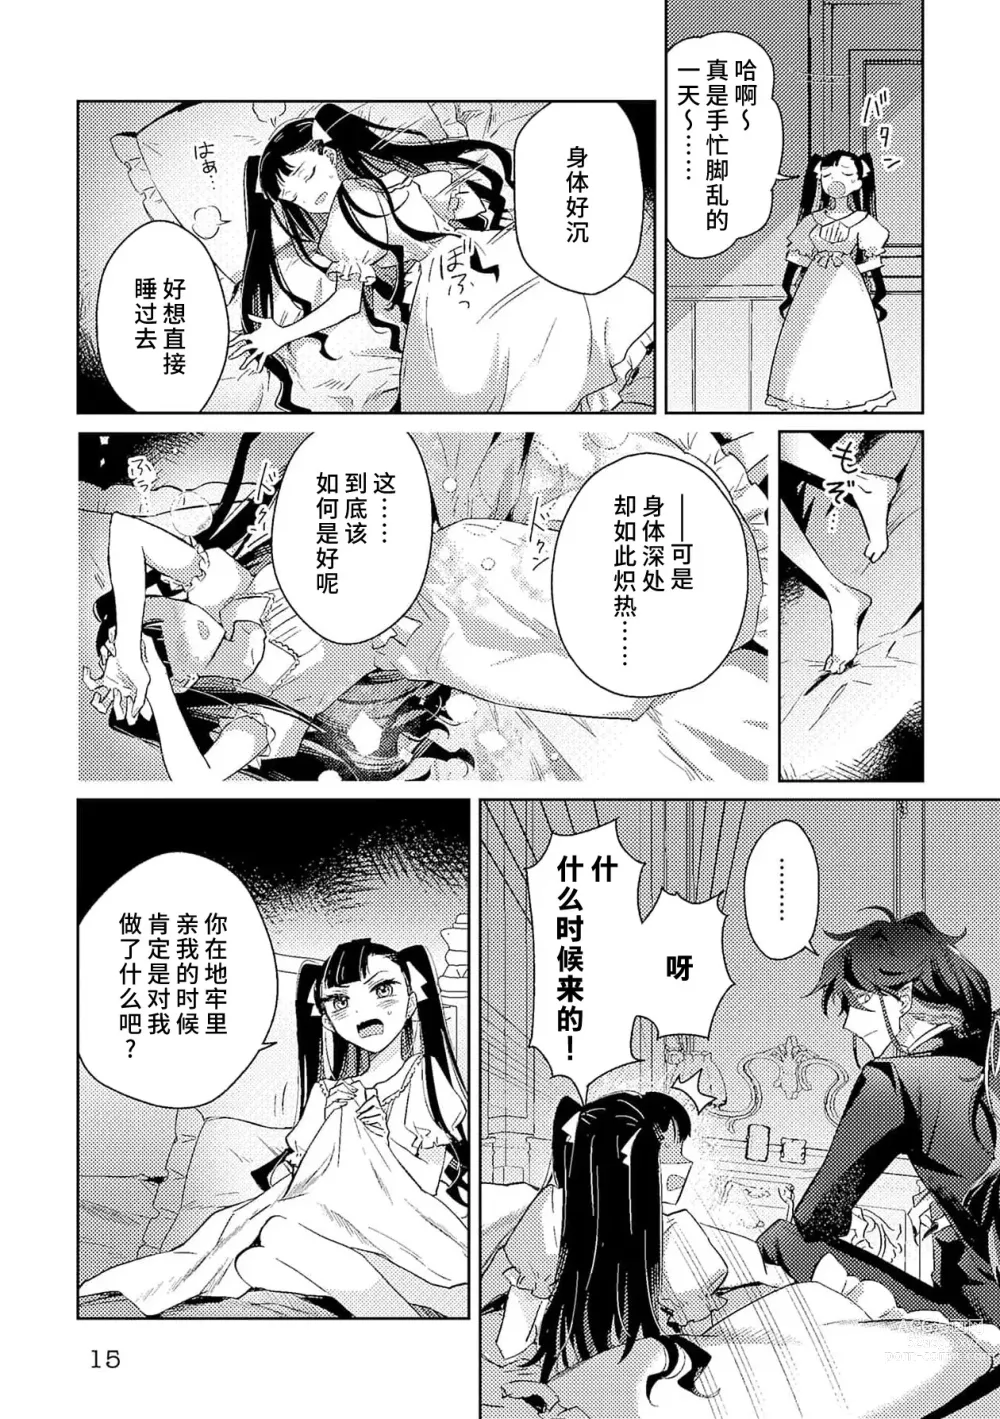 Page 15 of manga 身为恶役千金，堕落于魔界王子身下这条路线真的可以有？ 1-4